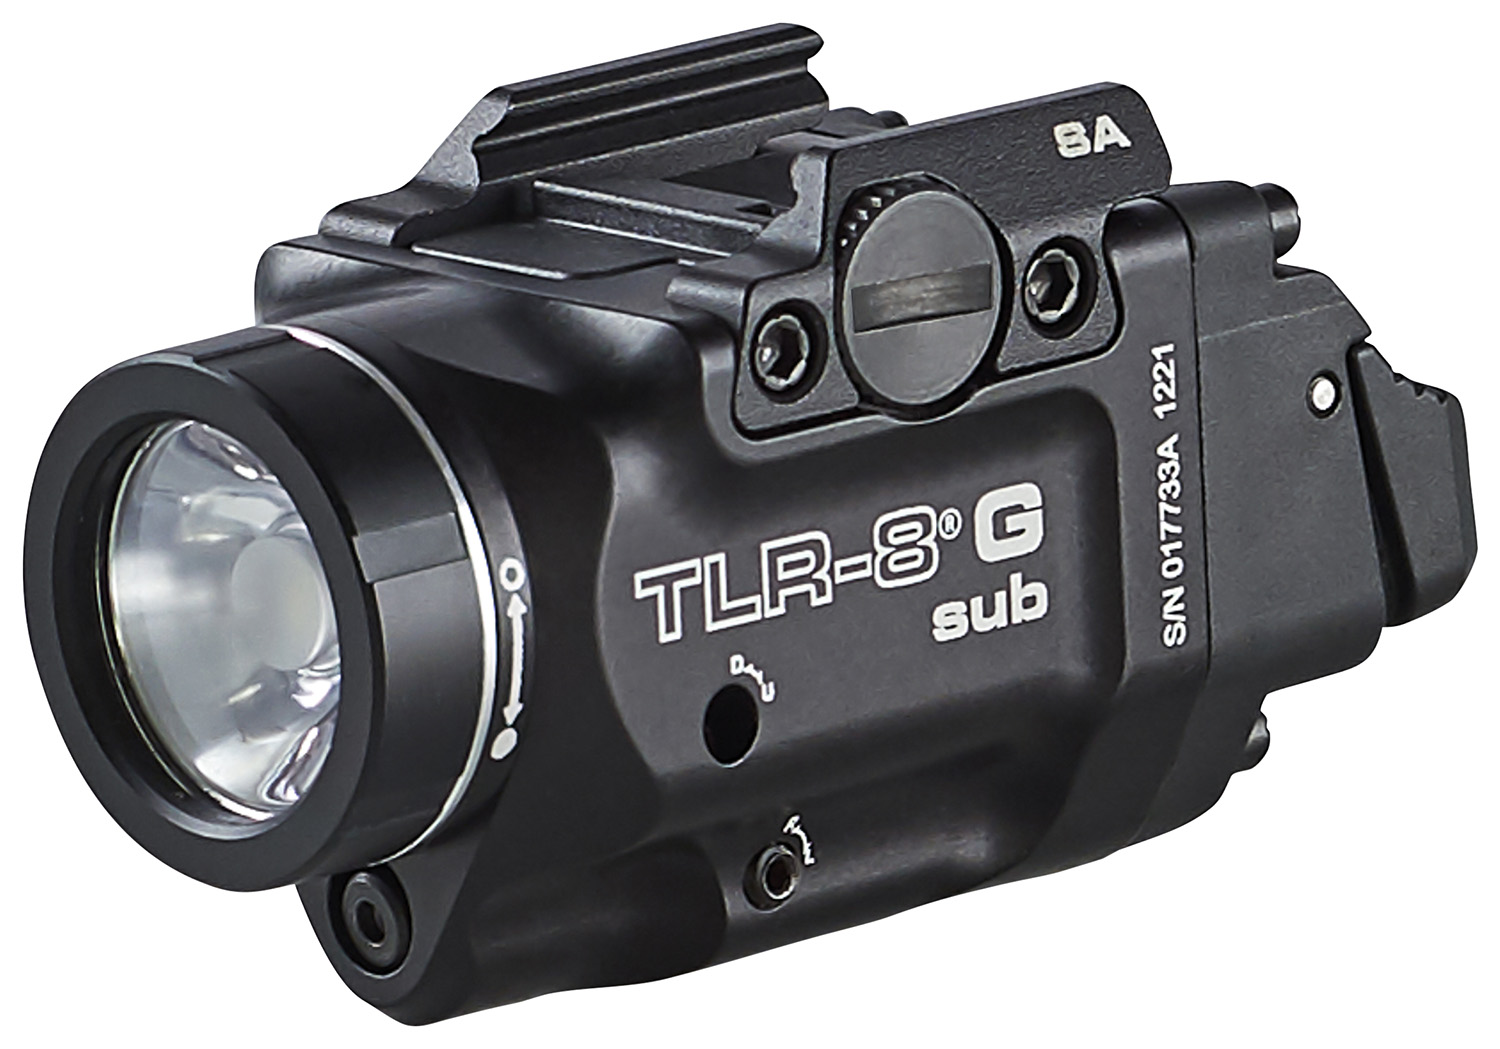 Streamlight 69439 TLR-8 Sub W/Laser Green Laser 500 Lumens 640-660Nm Wavelength, Black 141 Meters Beam Distance, Fits Sp